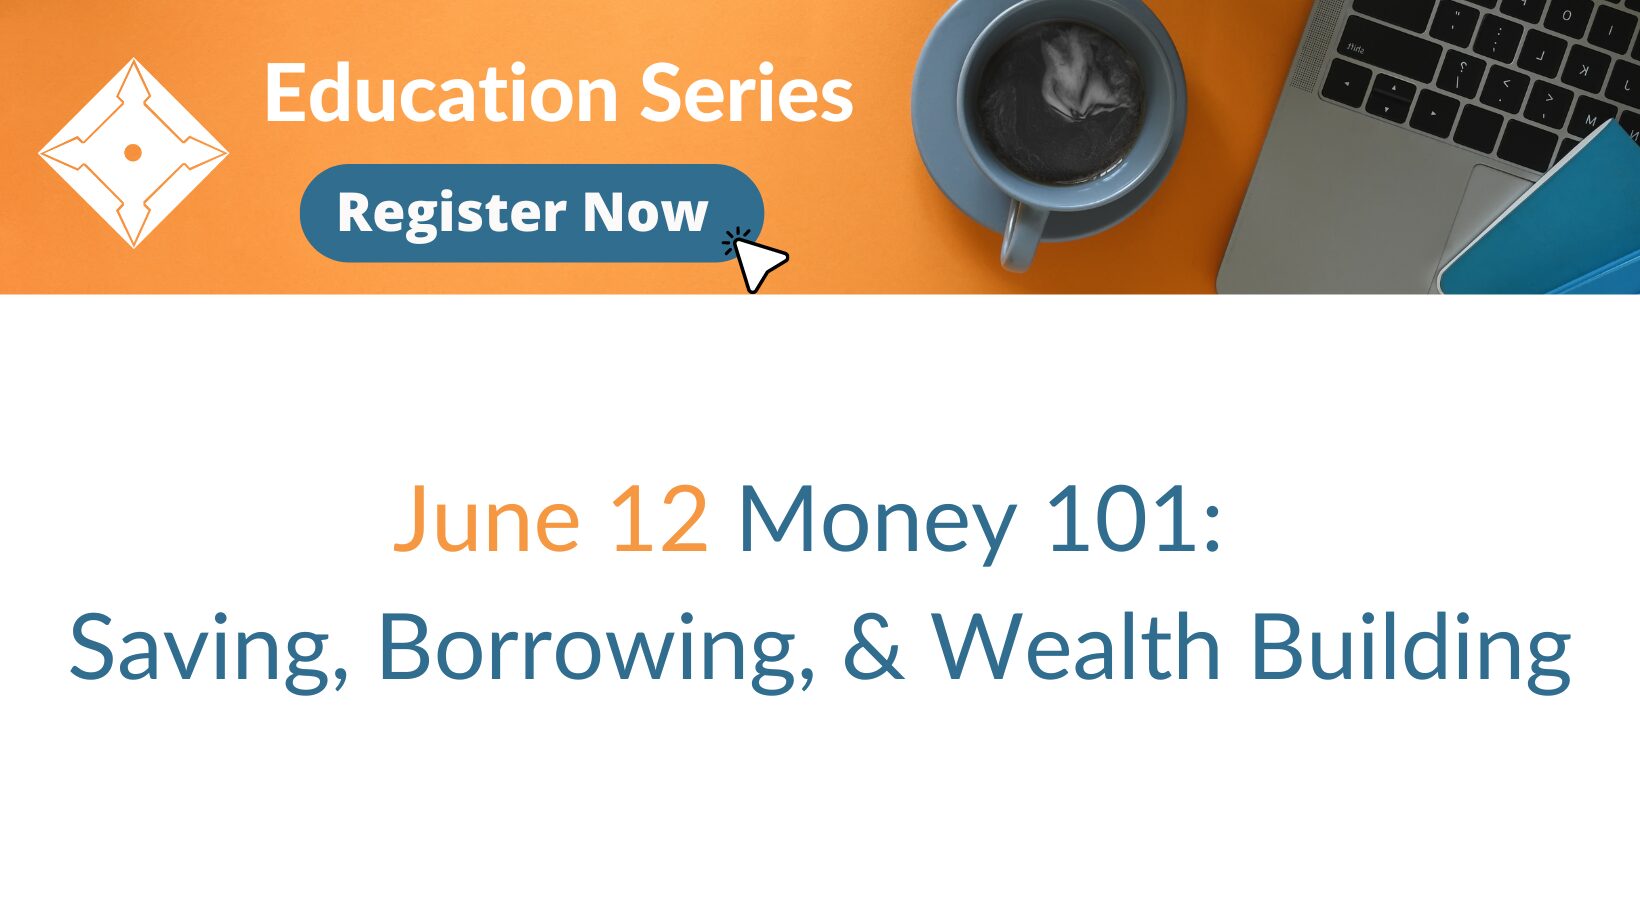 June 12 Money 101 Webinar